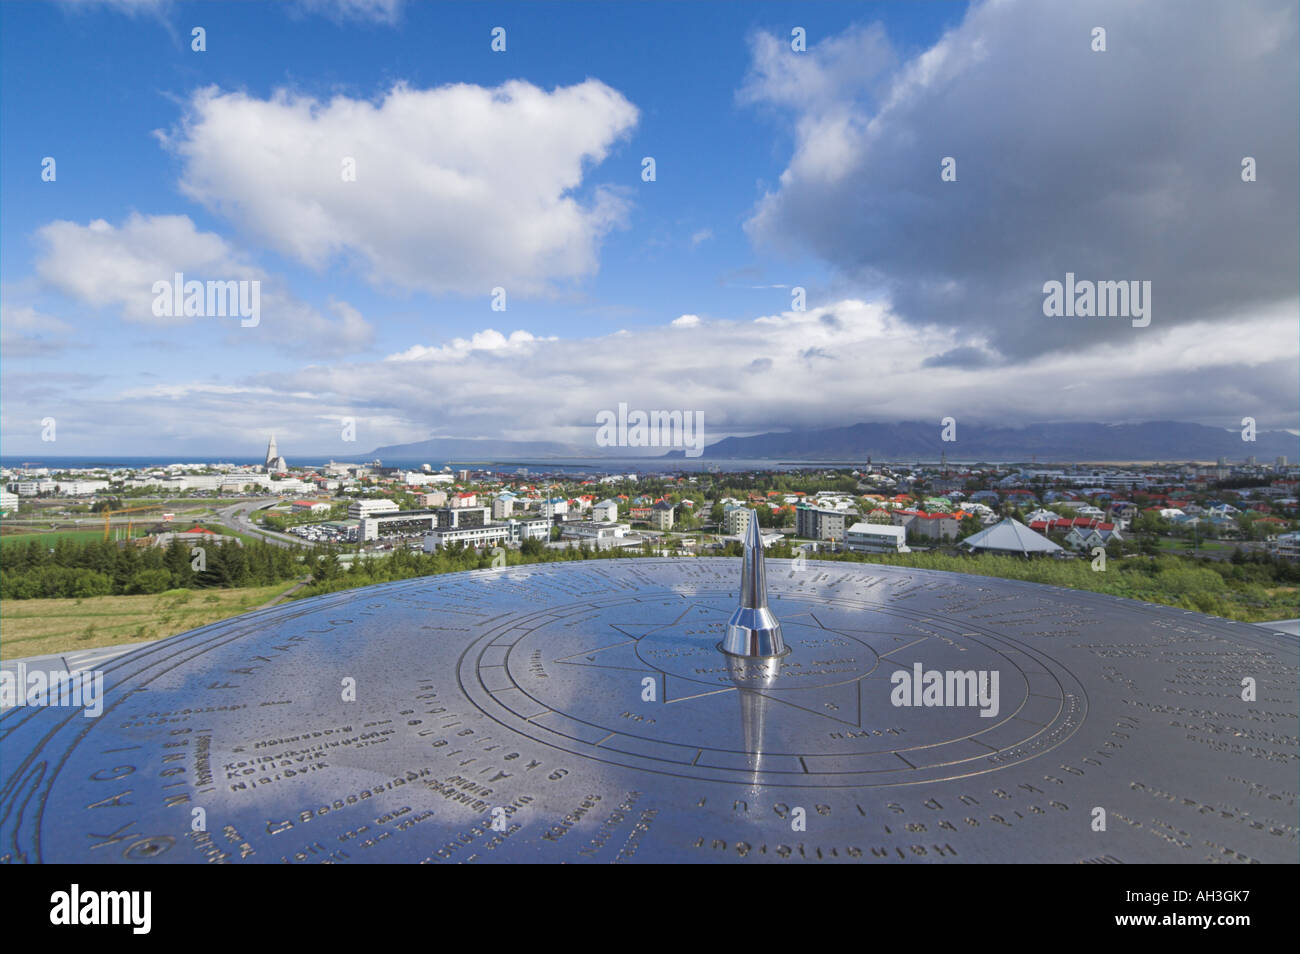 Reykjavik perlan vue à partir de la plate-forme d'observation pearl Islande capitale eu Europe Banque D'Images